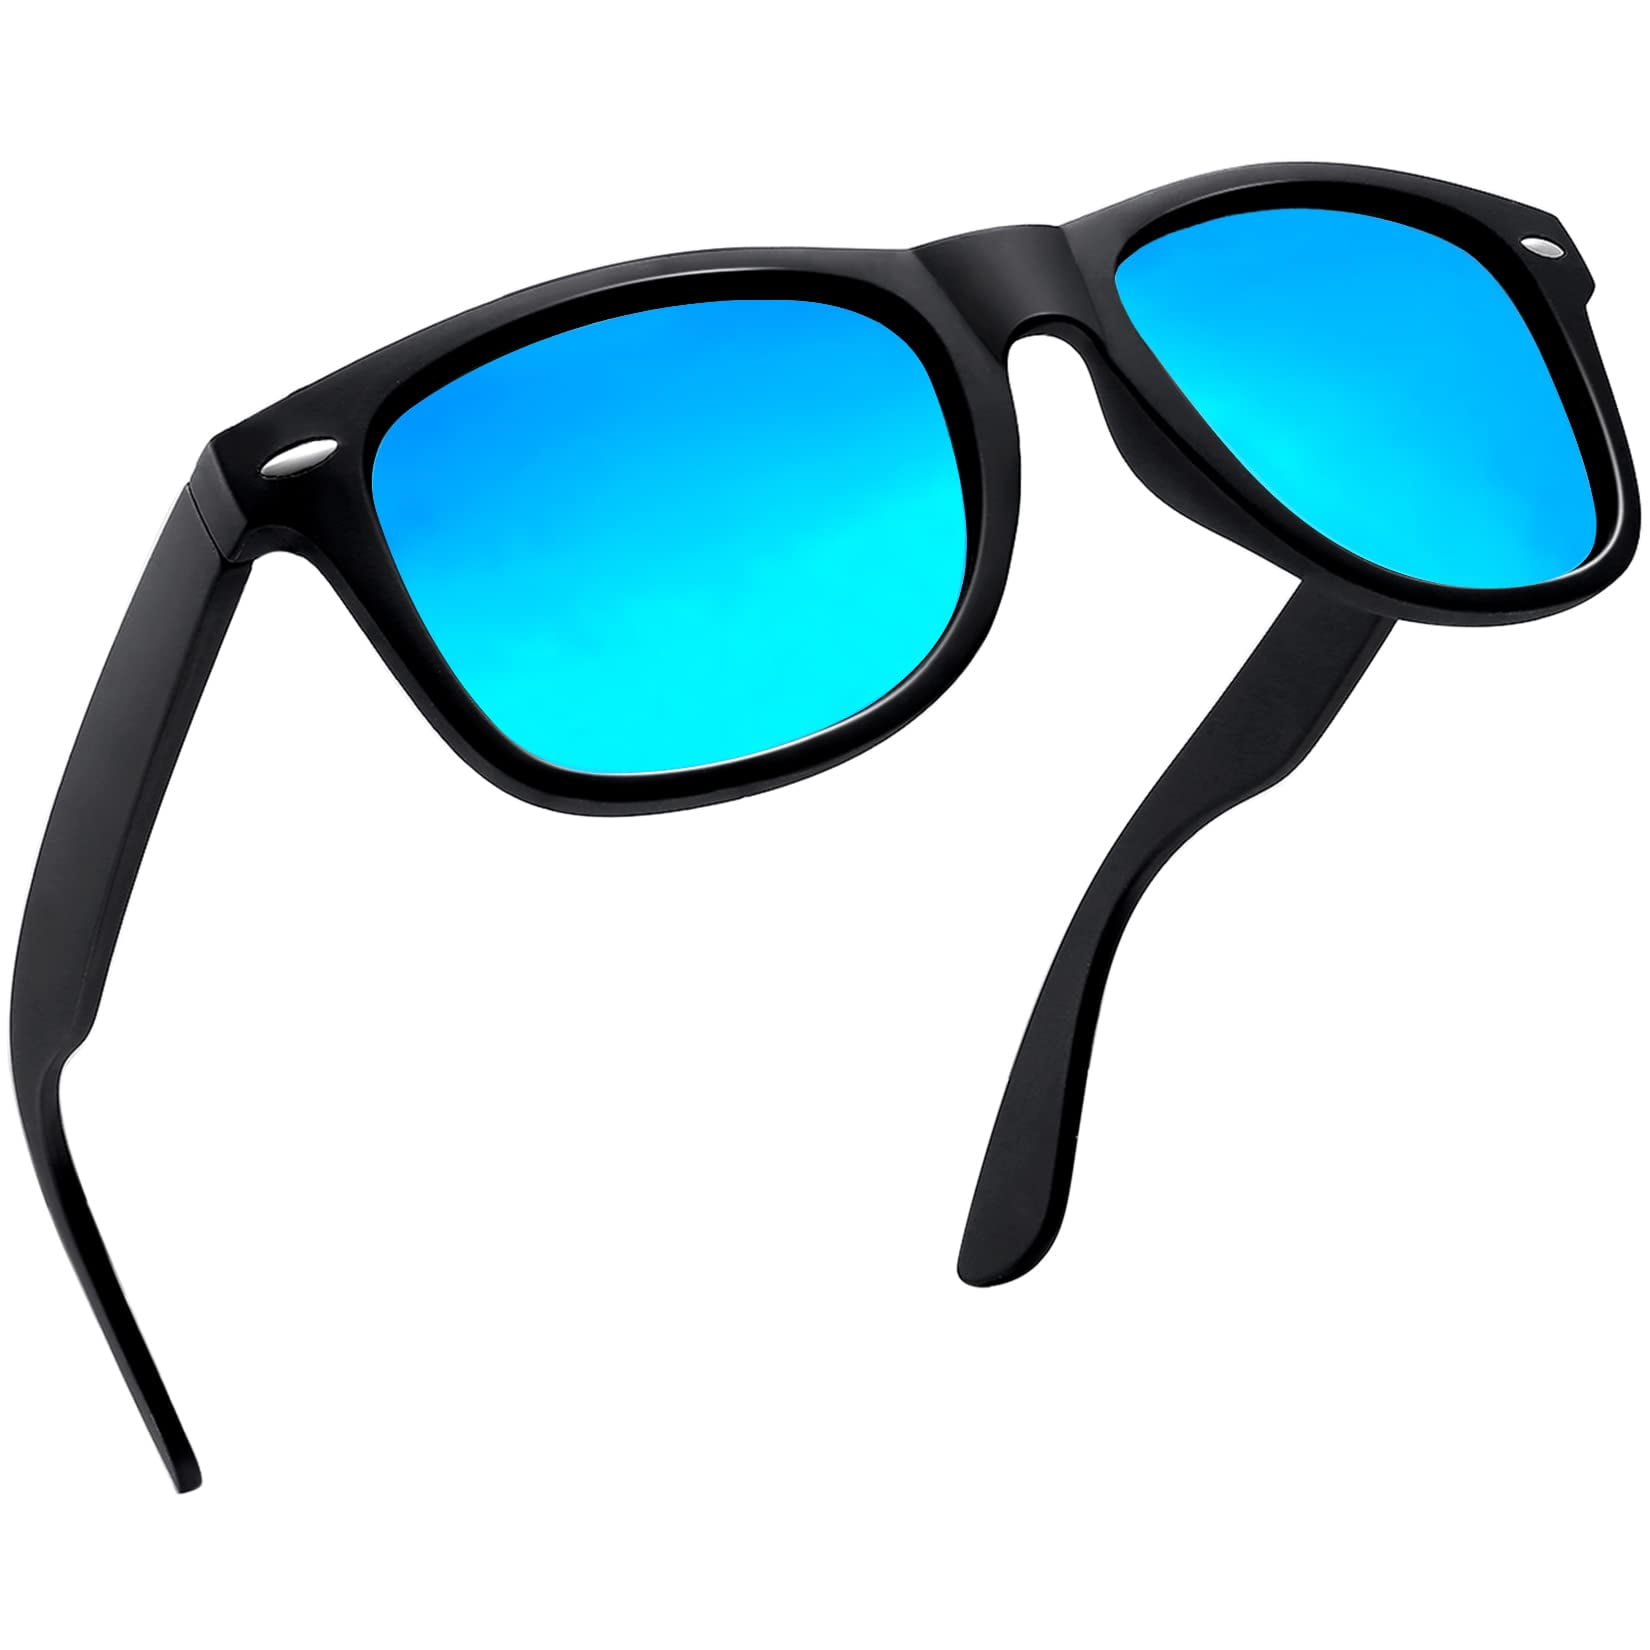 Joopin Polarized Sunglasses for Men Women Shades for Driving